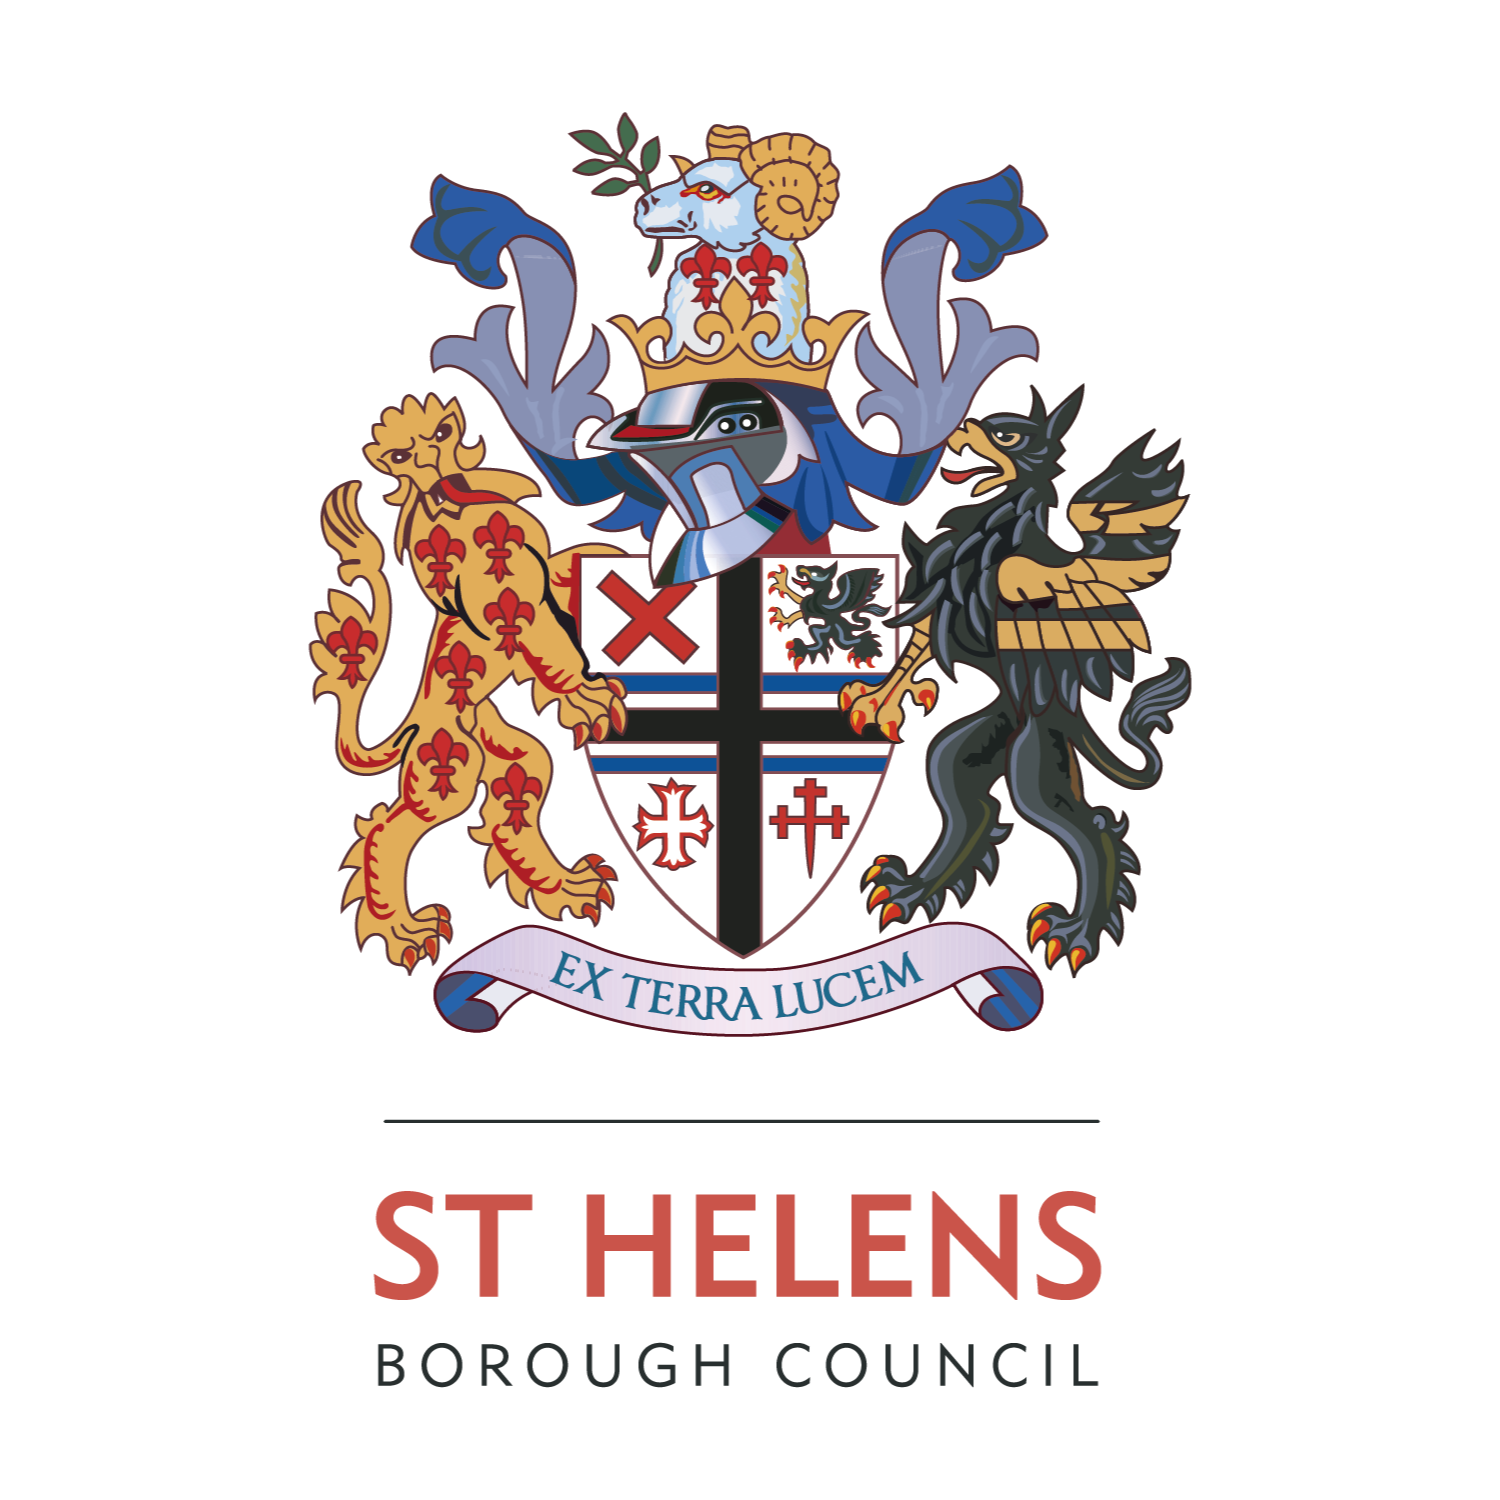 St Helens Borough Council logo